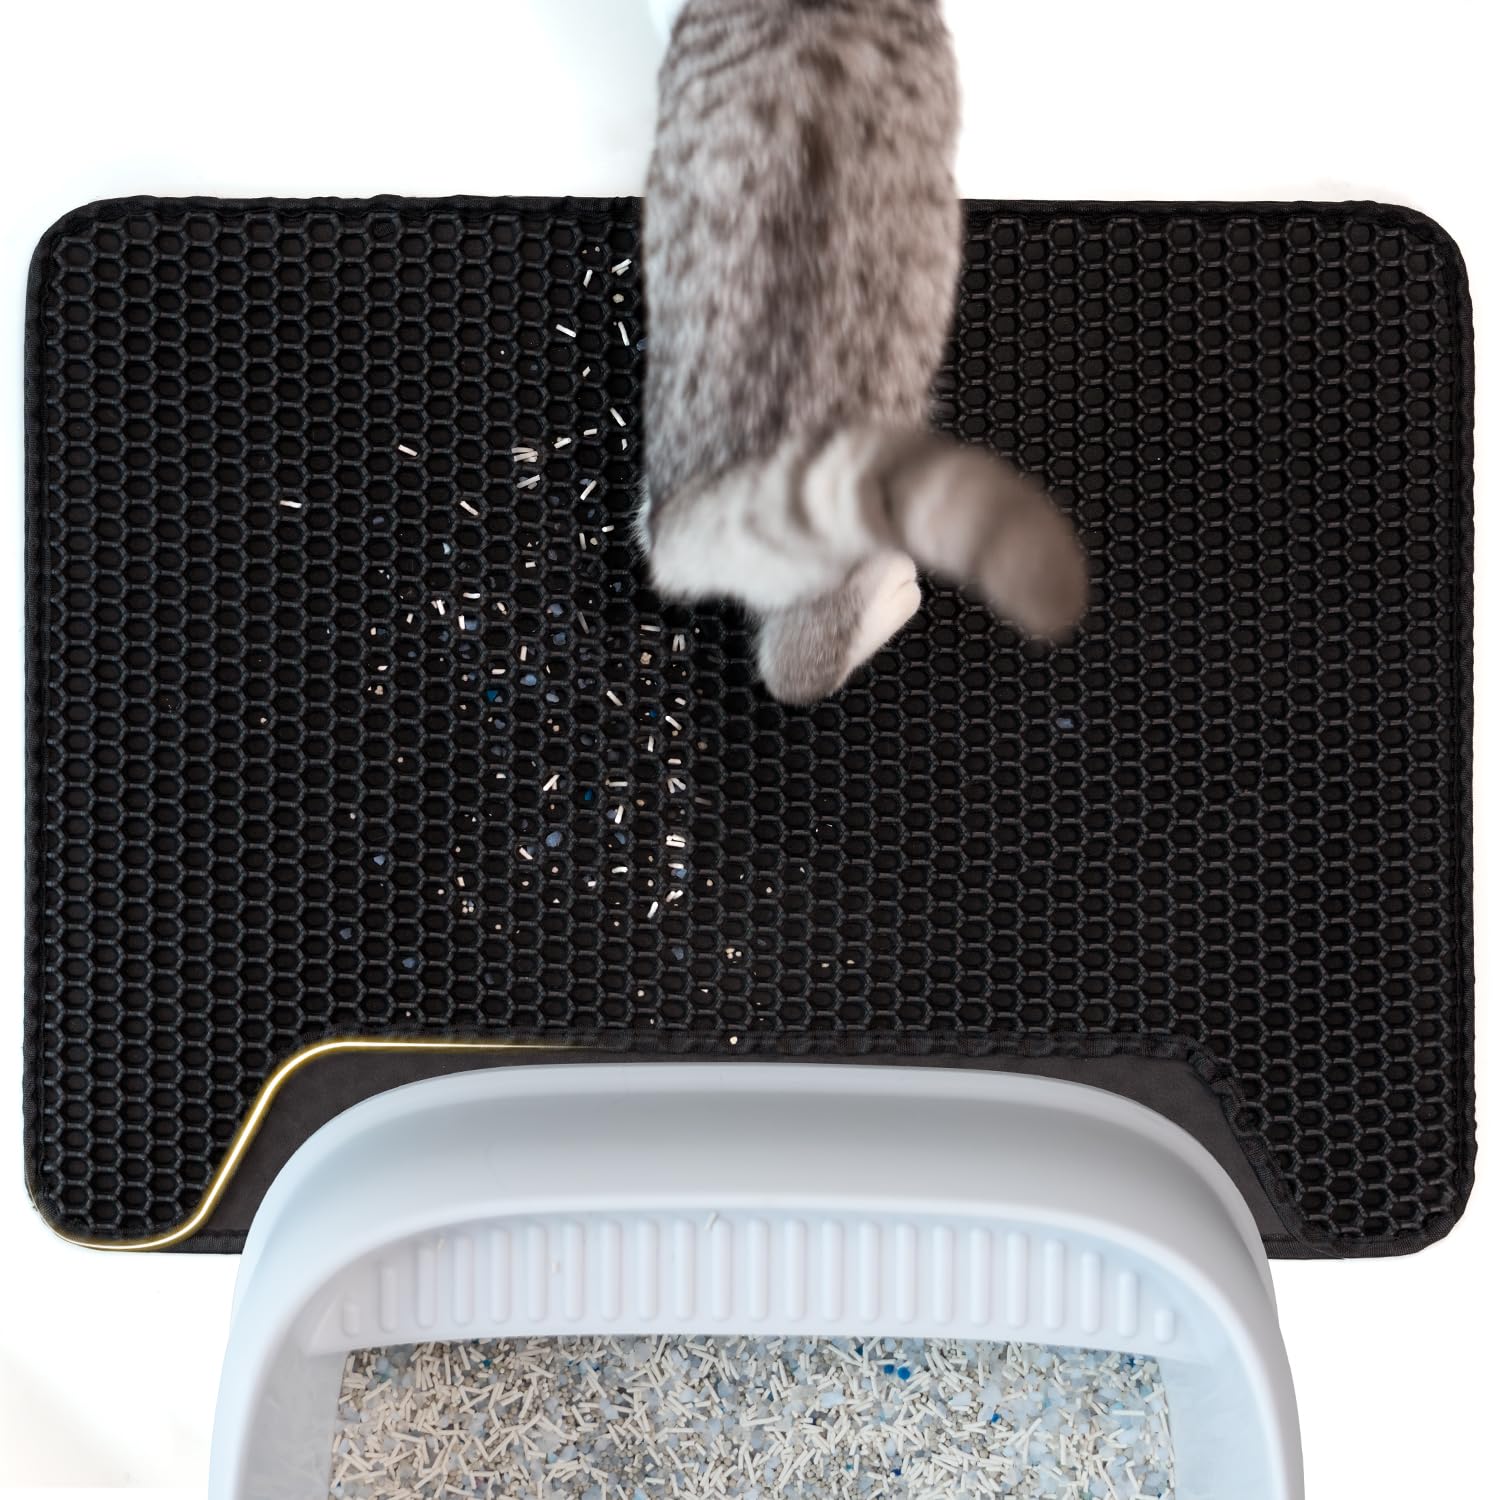 Conlun Cat Litter Mat, 24 x 17 Premium Durable PVC, Non-Slip